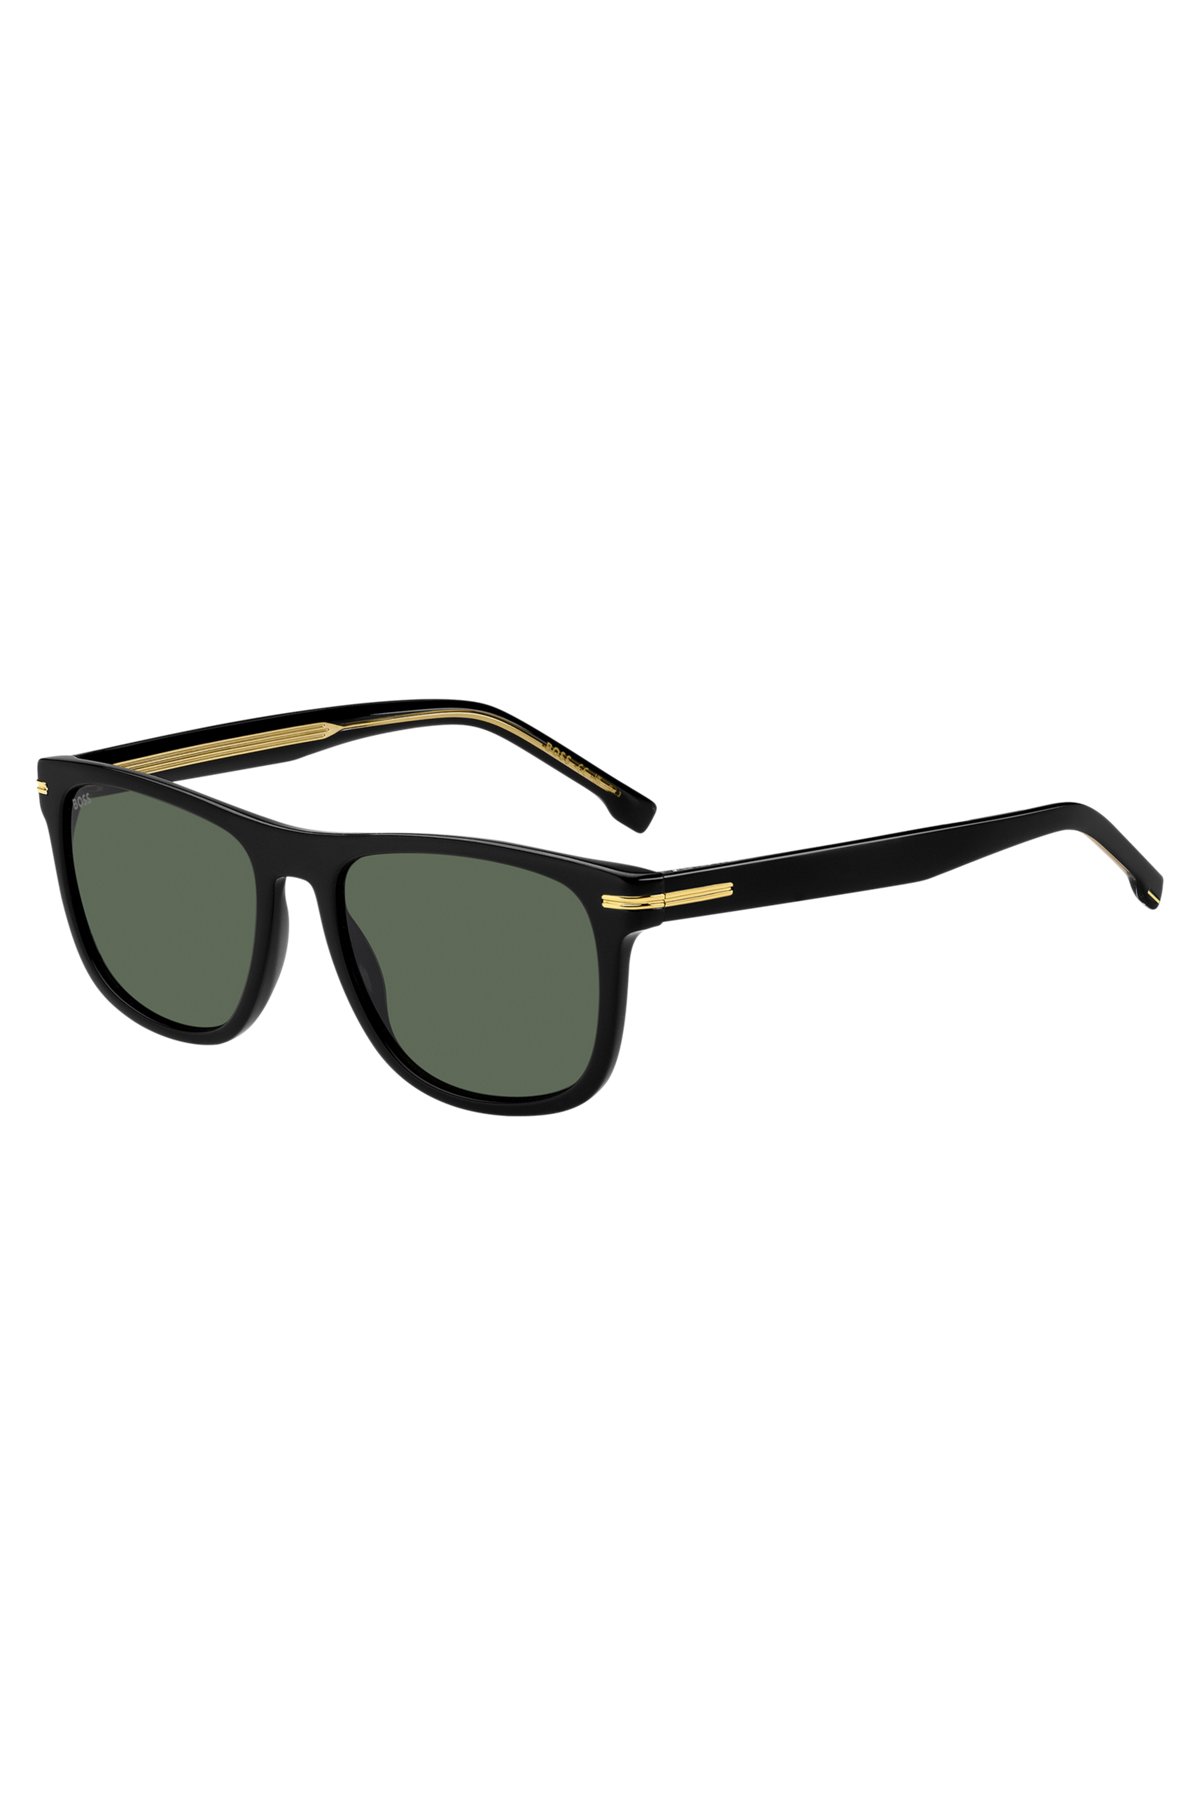 BOSS - Black-acetate sunglasses with gold-tone hardware